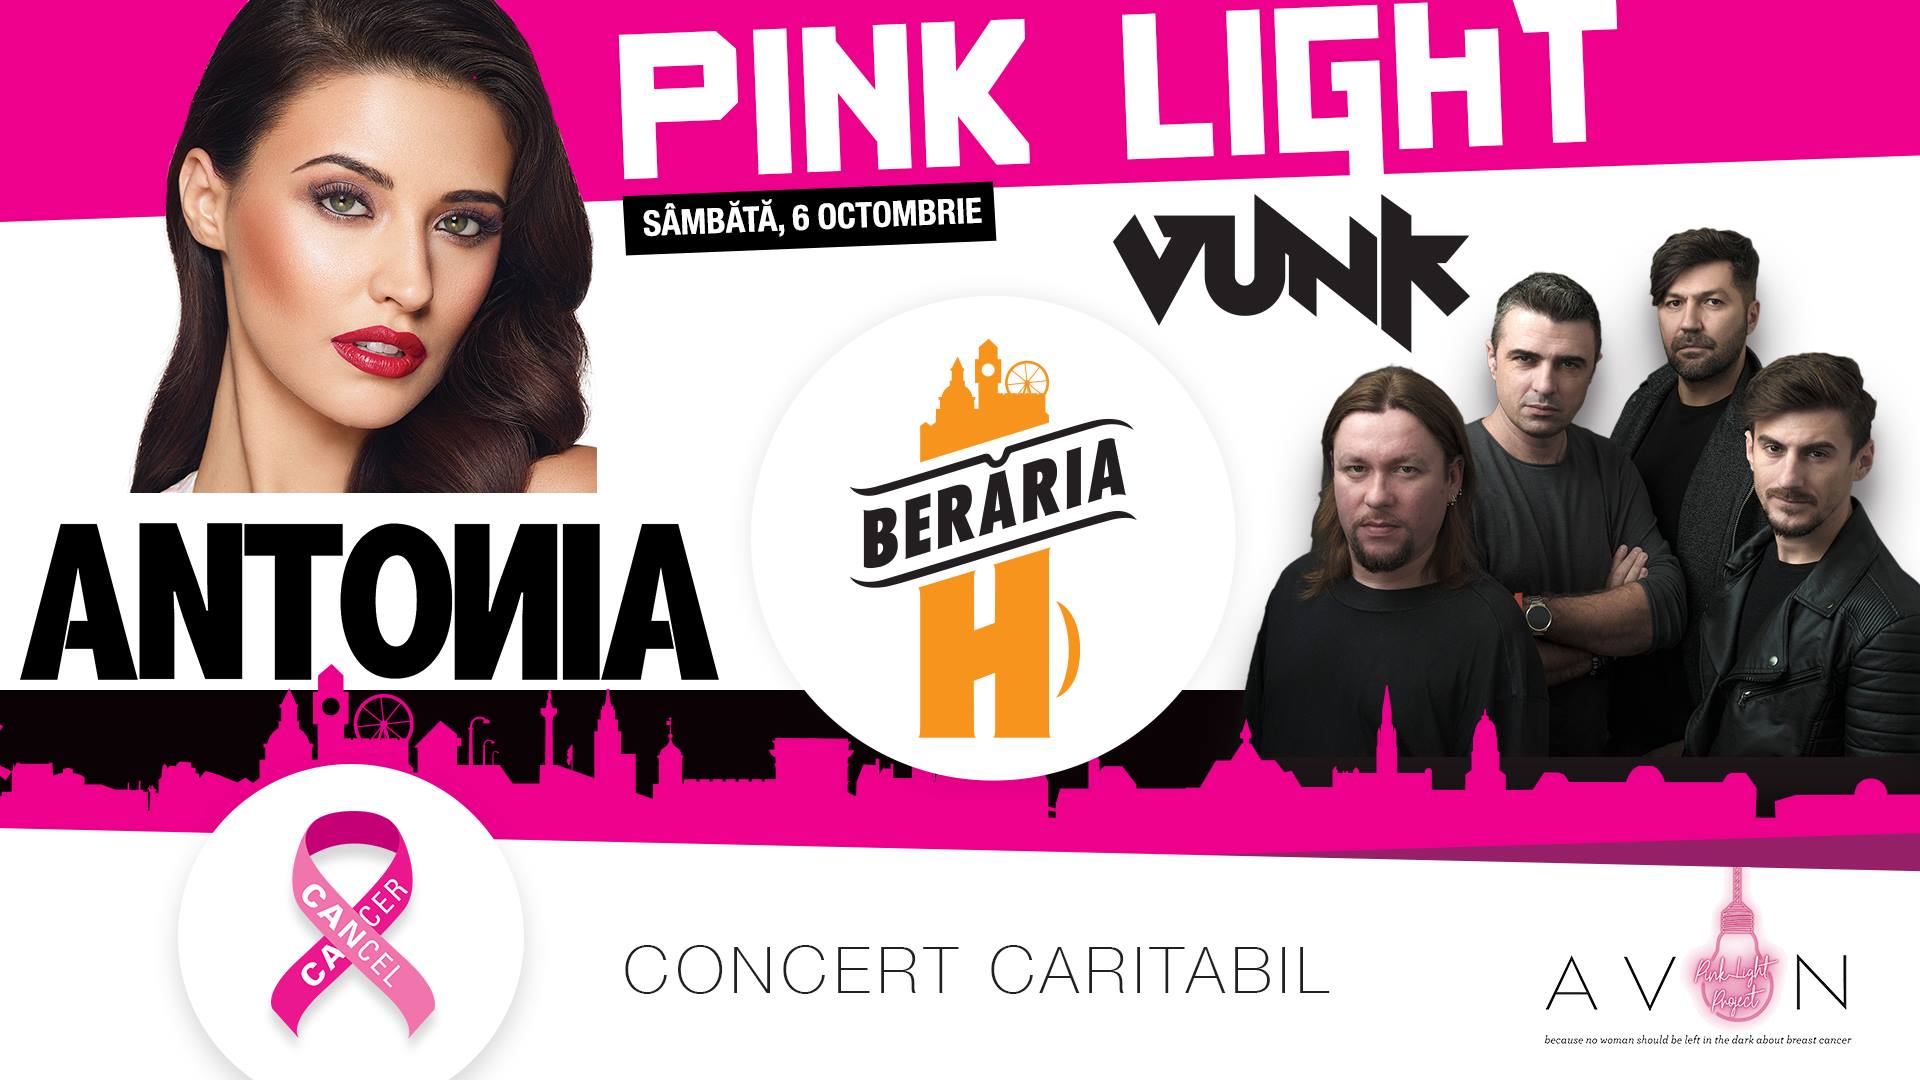 Pink light concert cu Antonia si Vunk